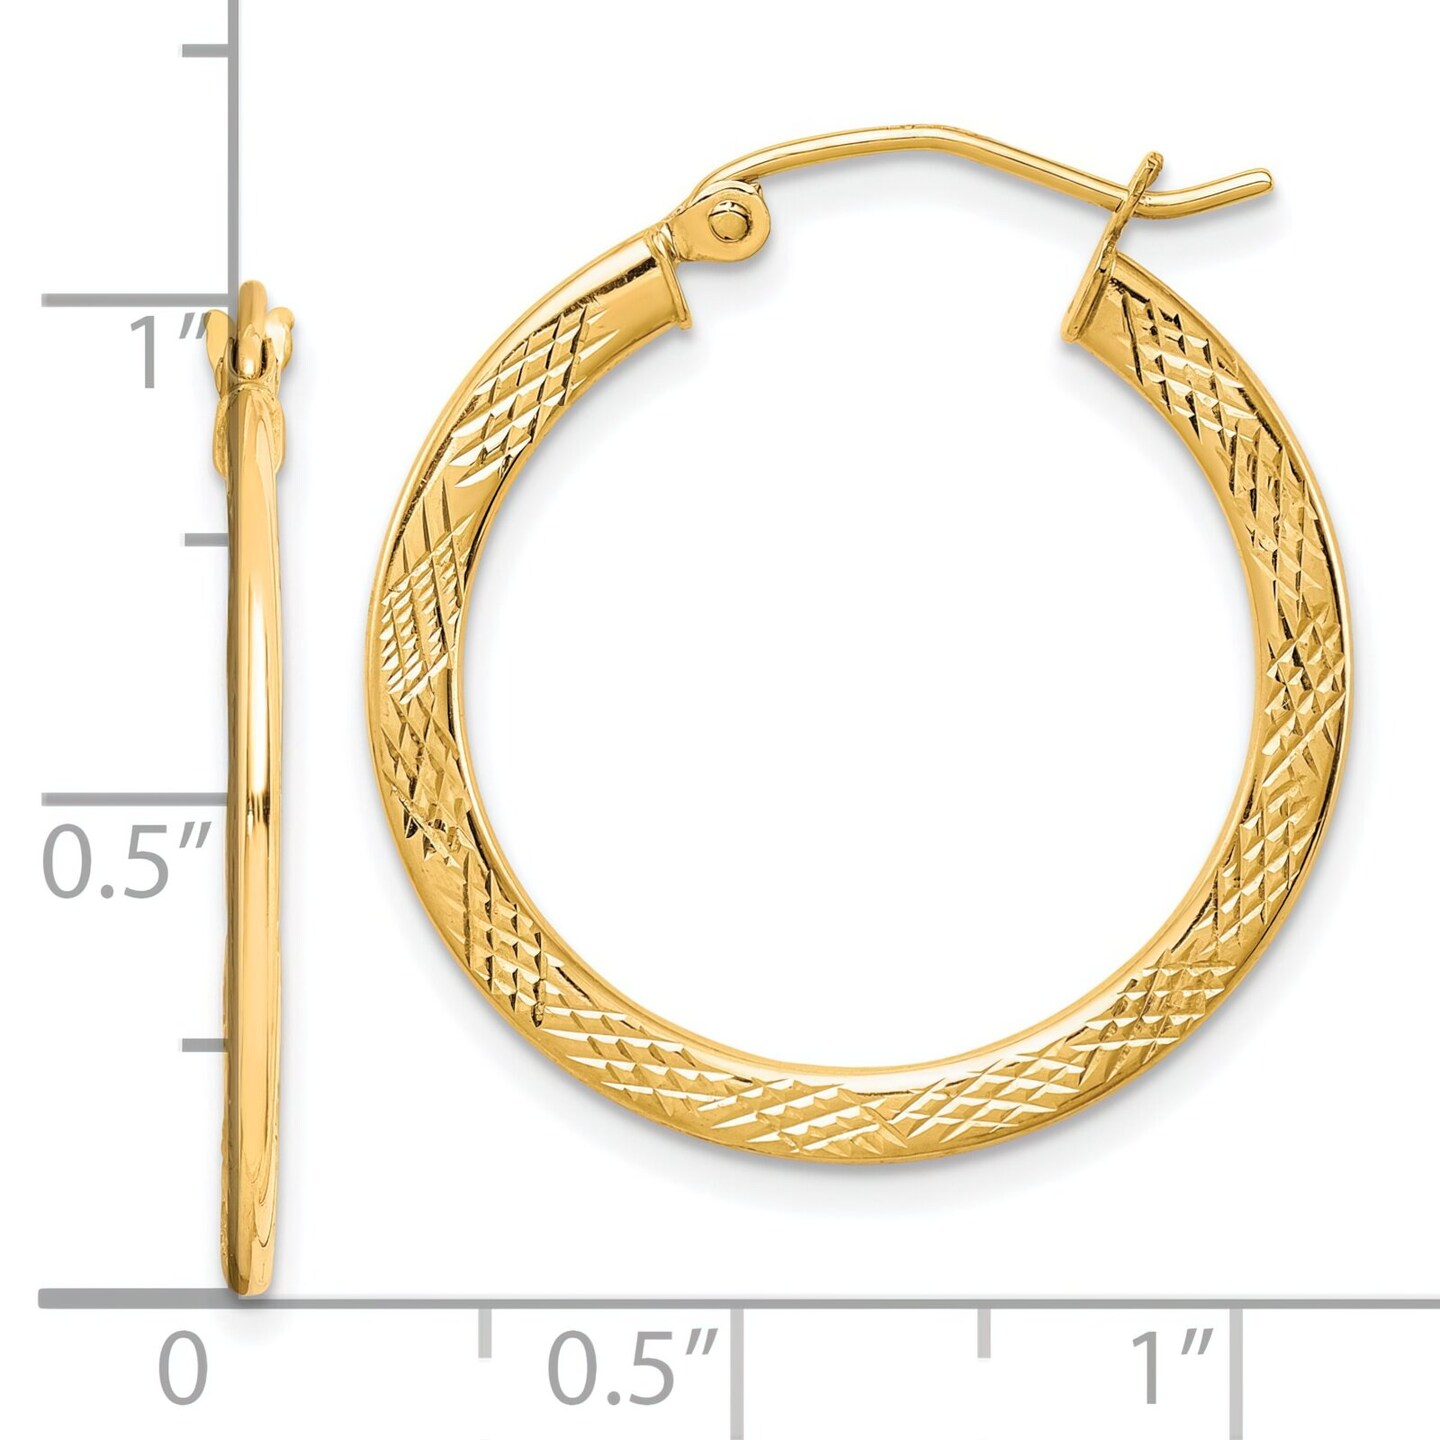 10K Gold Textured Hoop Earrings Jewelry 26 x 1.3mm